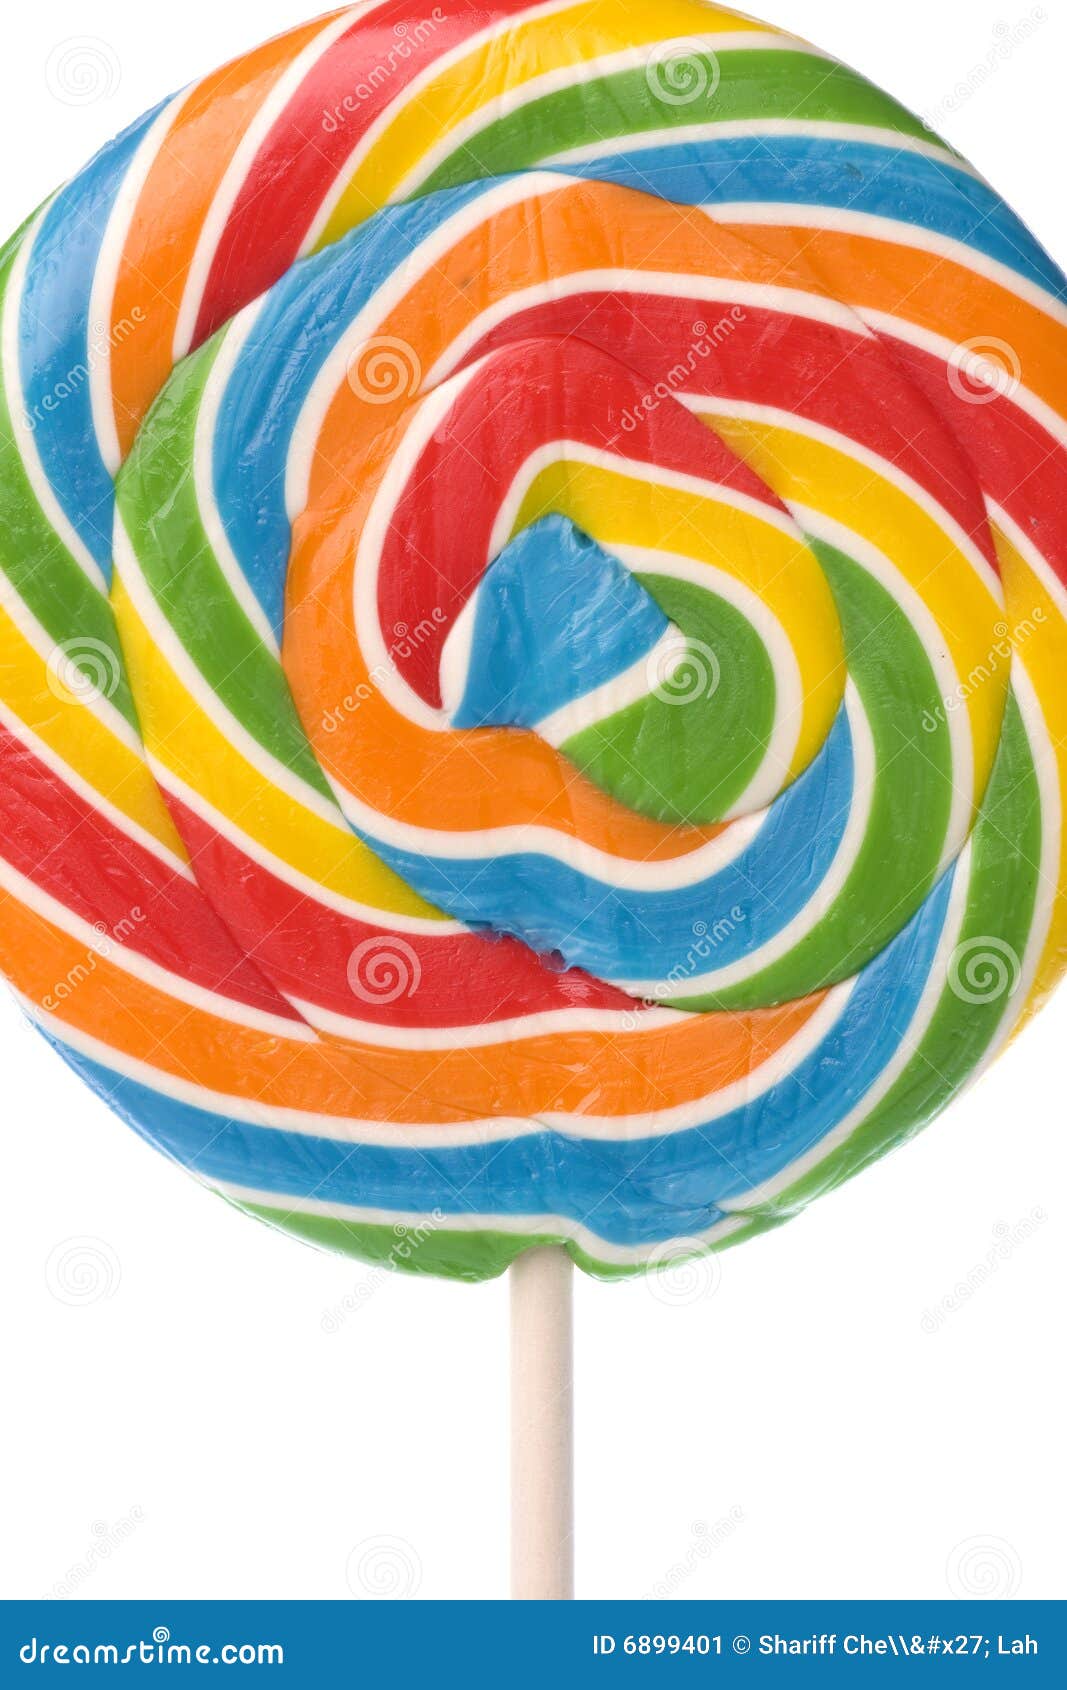 rainbow lollipop clipart - photo #33